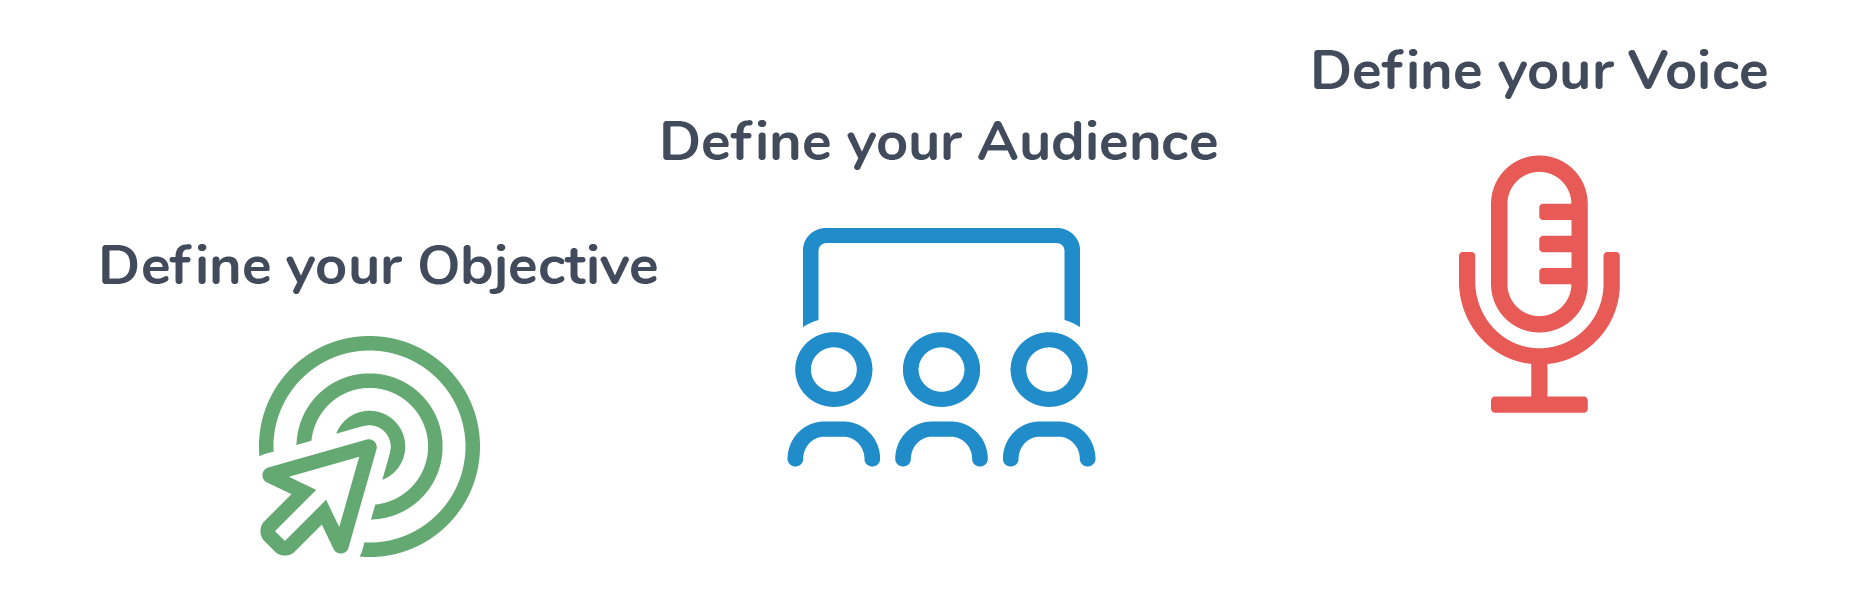 Define your Objective Audience Voice